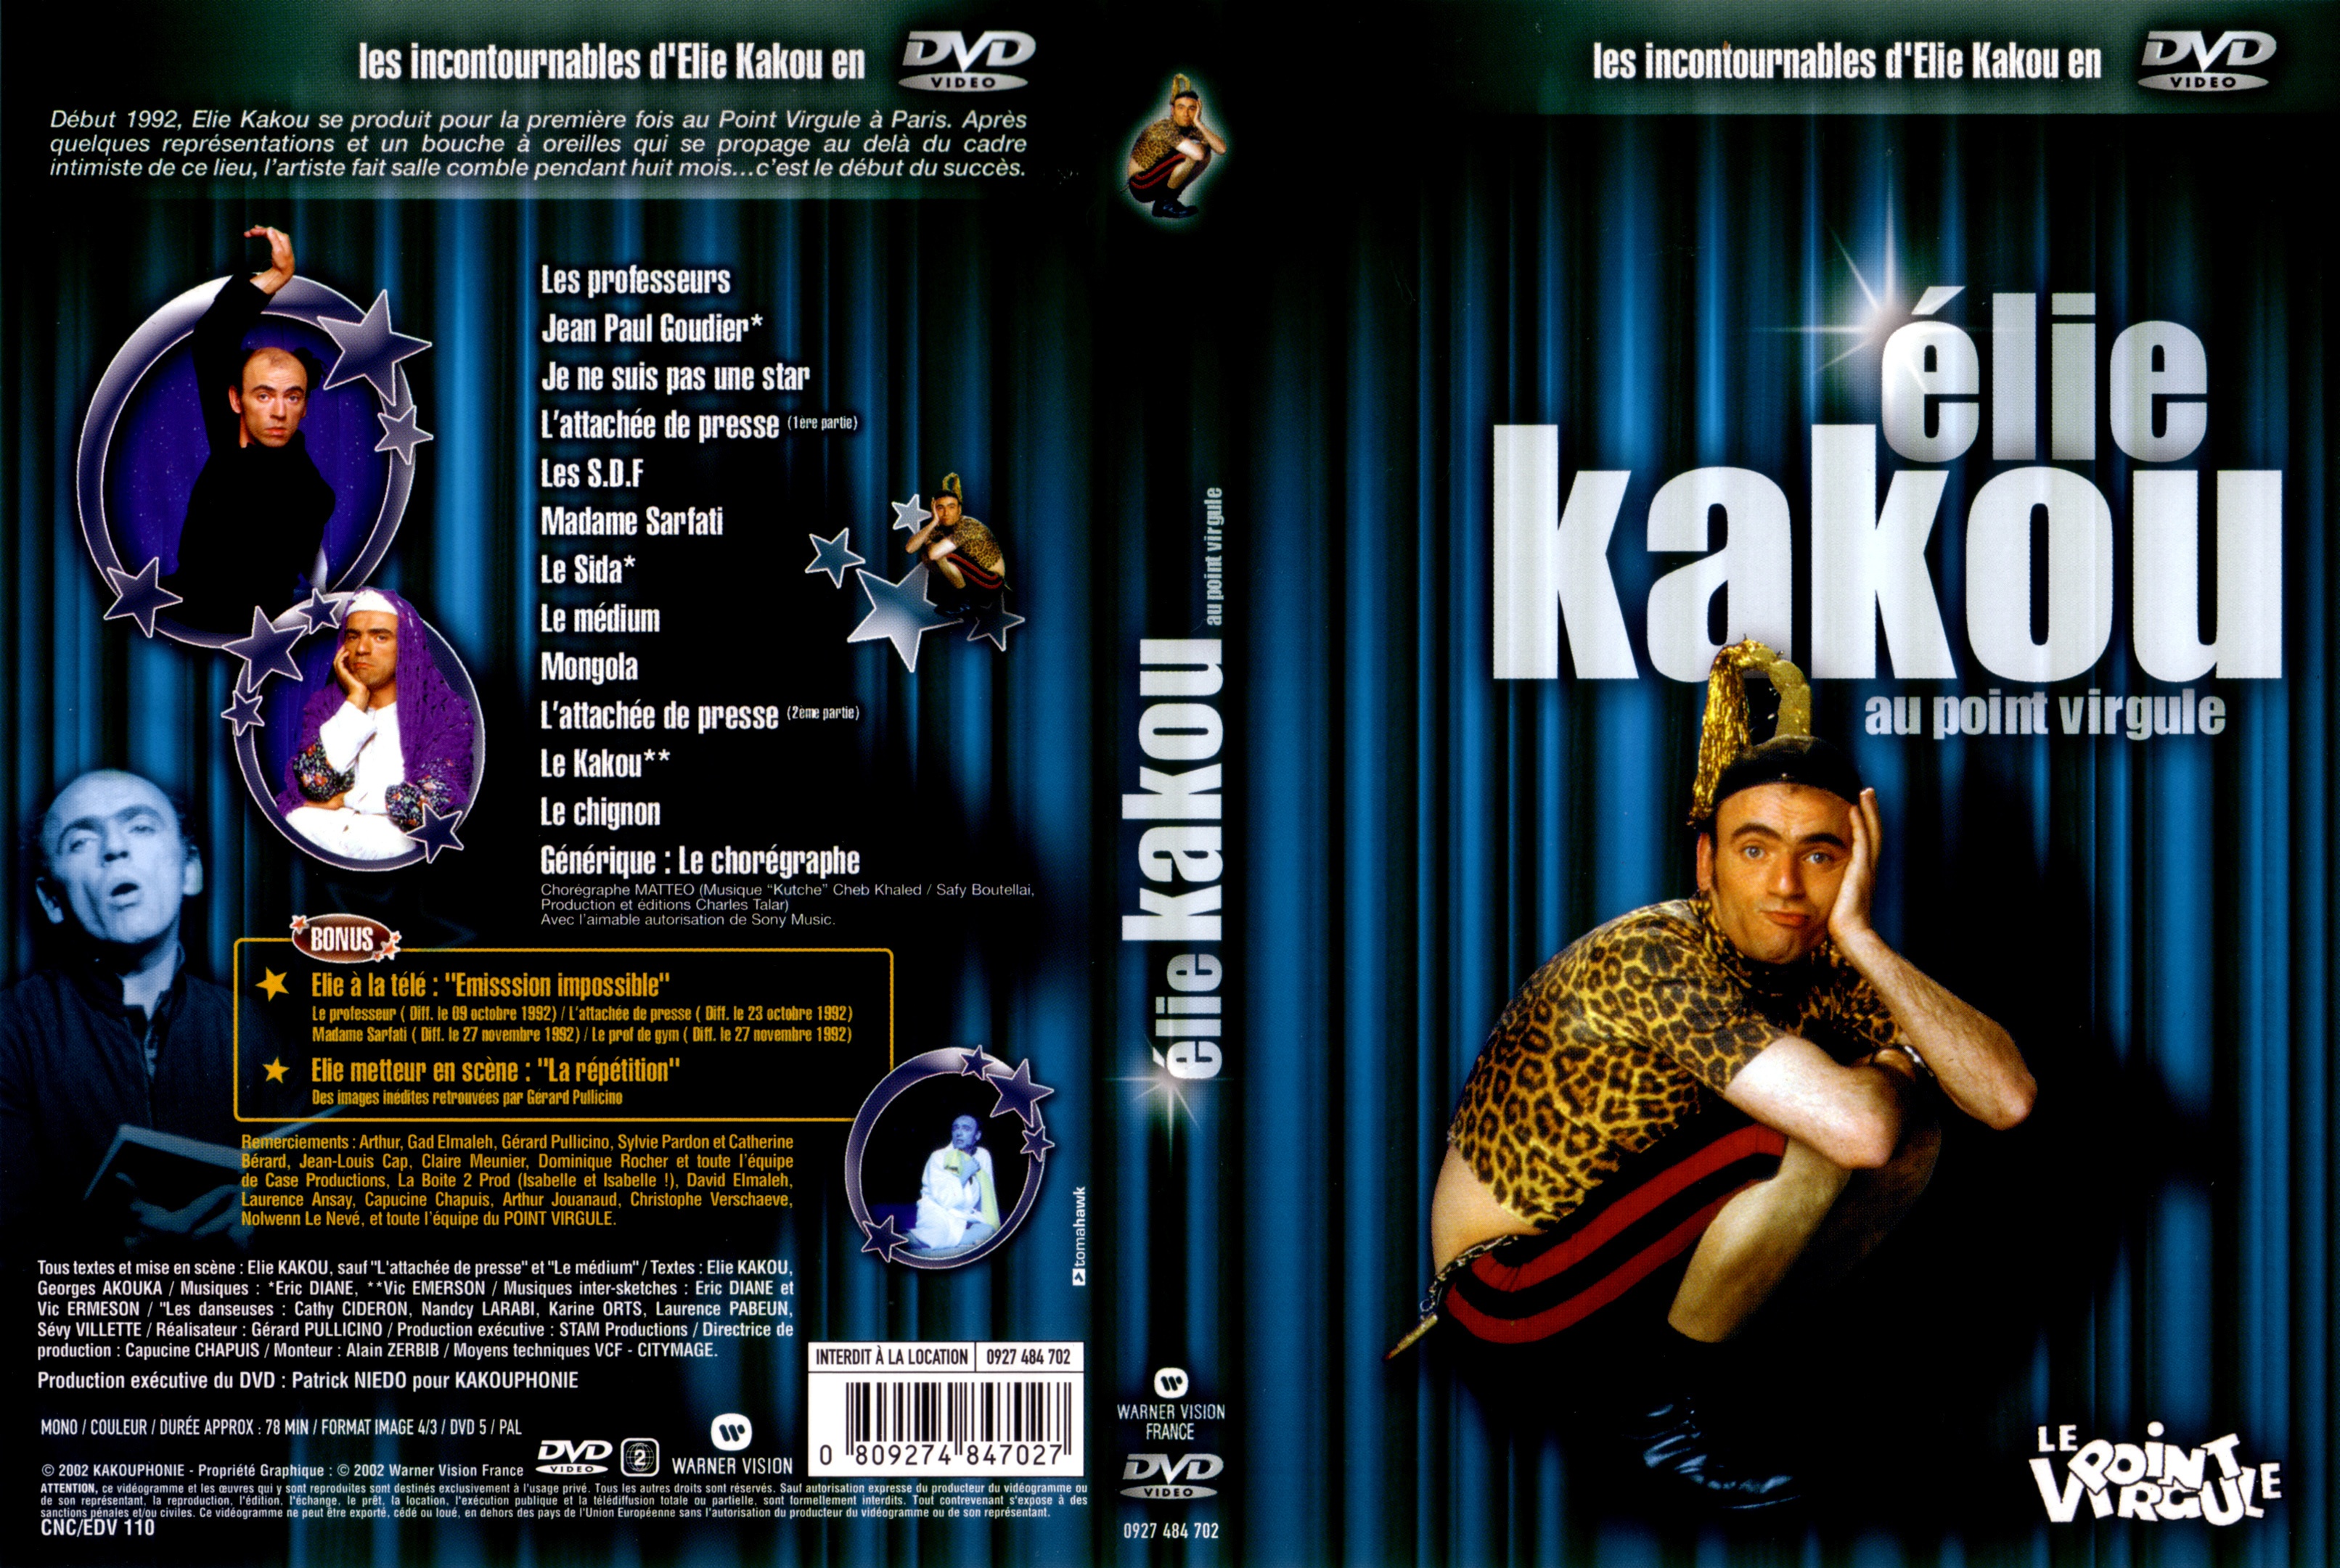 Jaquette DVD Elie Kakou au point virgule